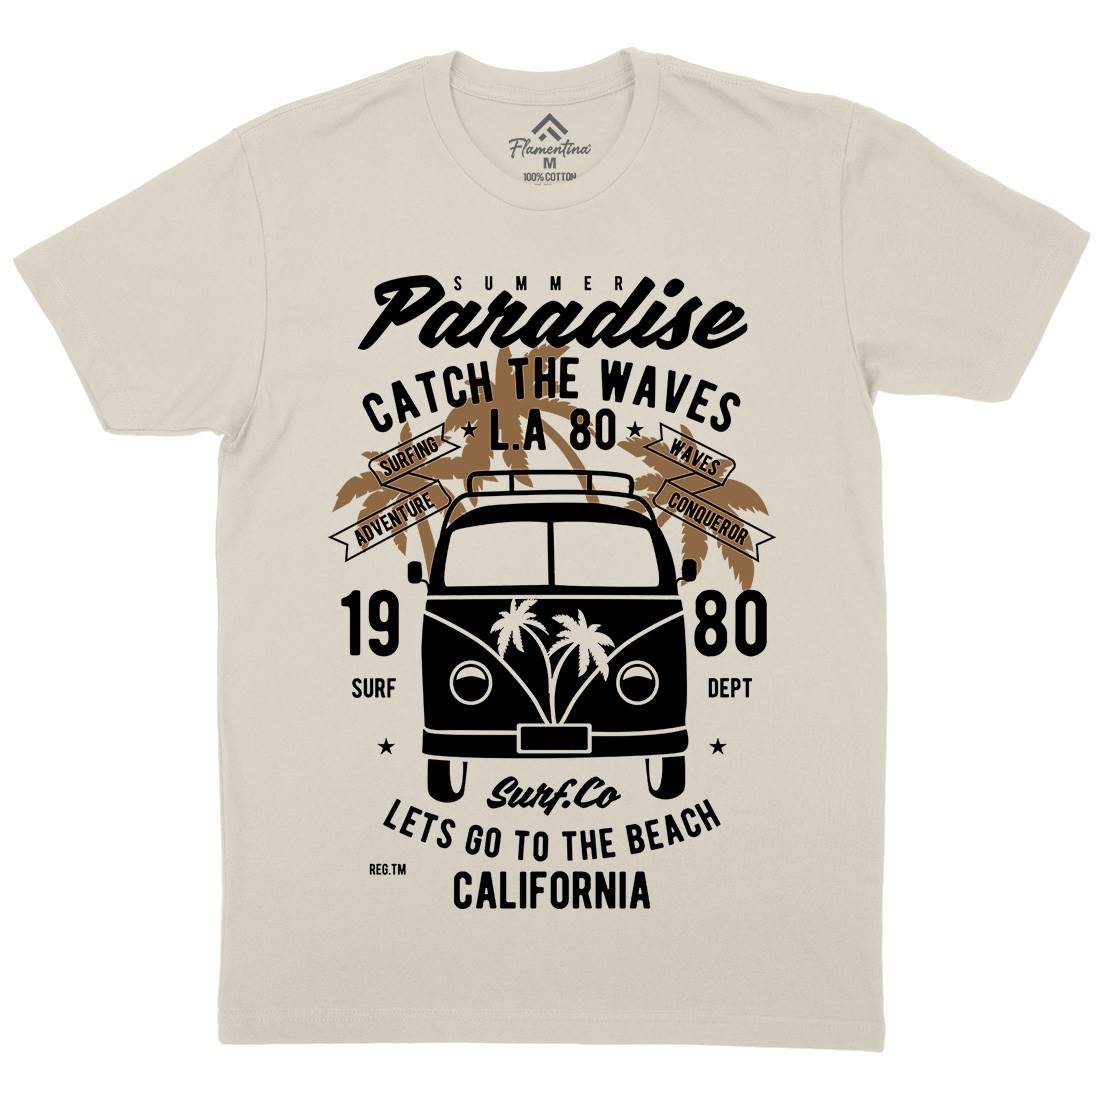 Catch The Waves Surfing Van Mens Organic Crew Neck T-Shirt Surf B393